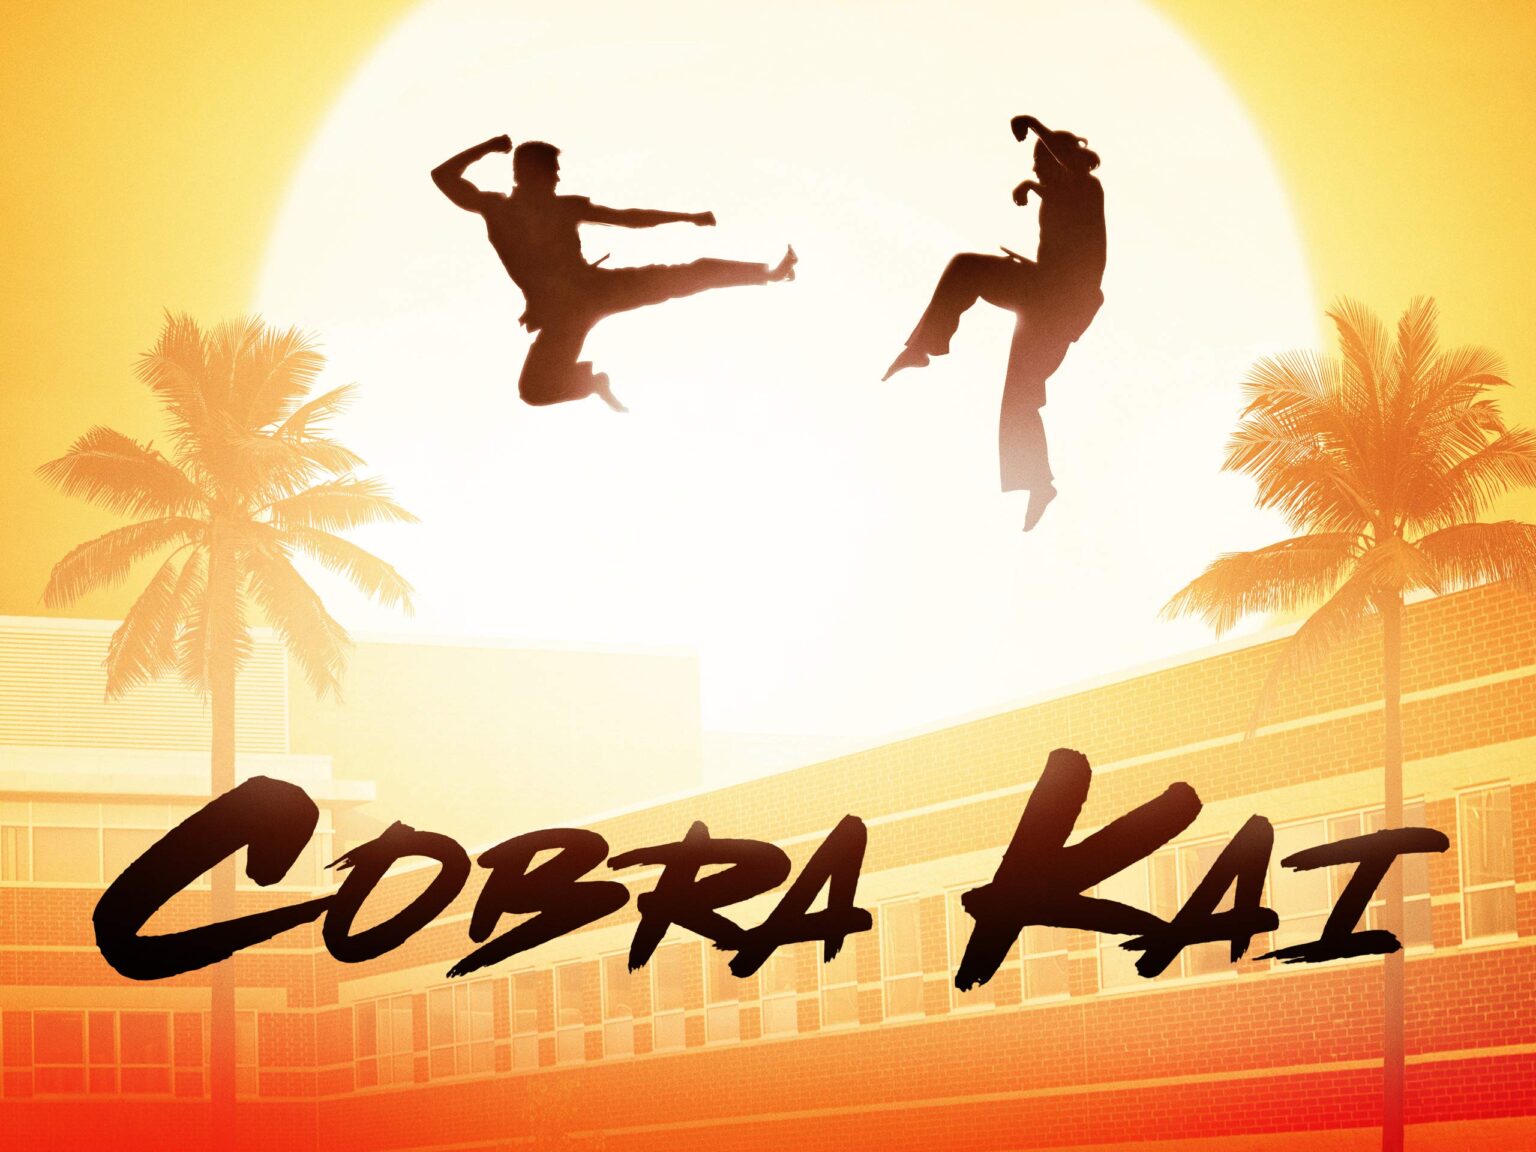 Cobra Kai Season 3 New Images And A New Trailer